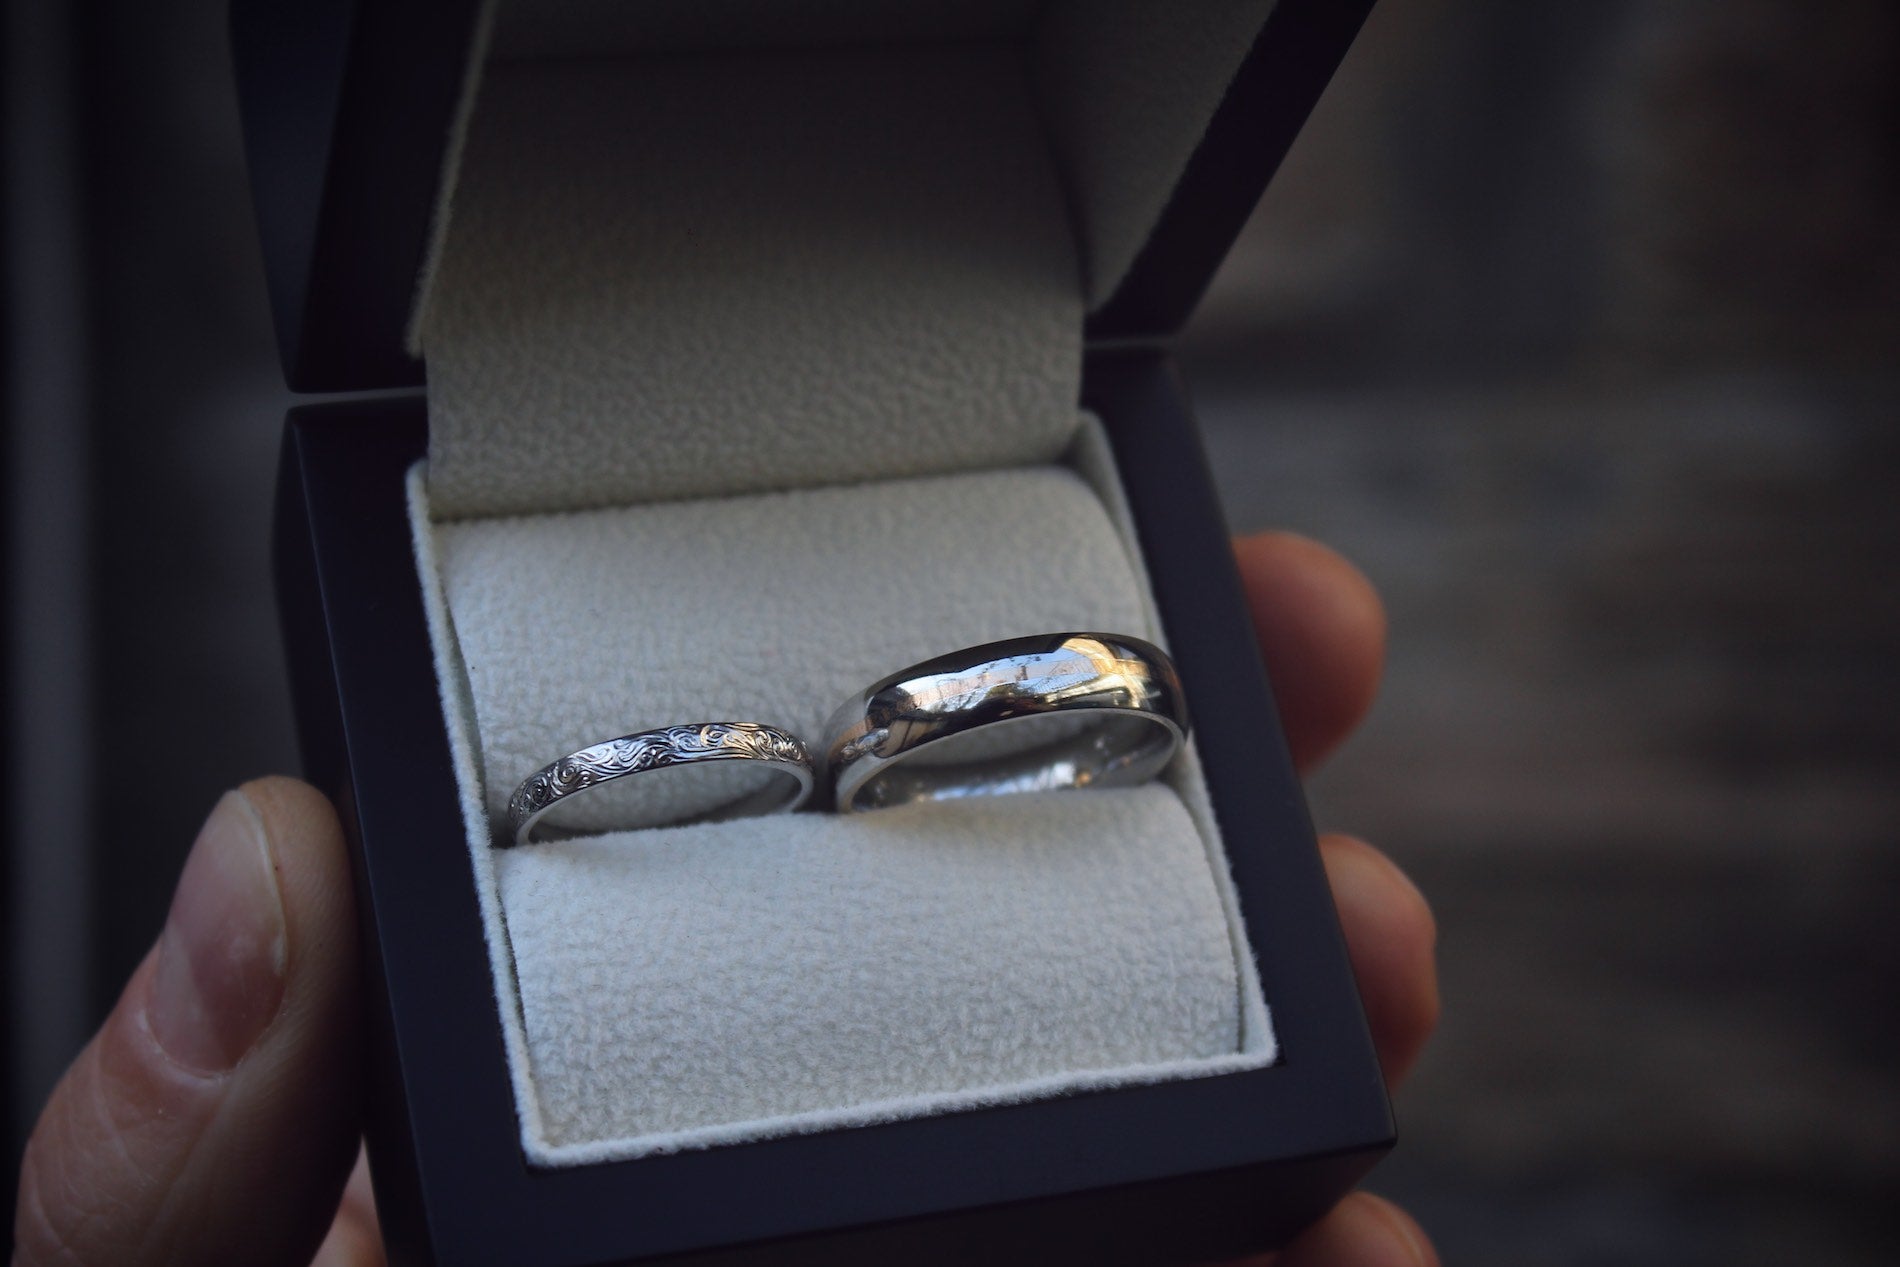 Hand Engraved Platinum Wedding Rings